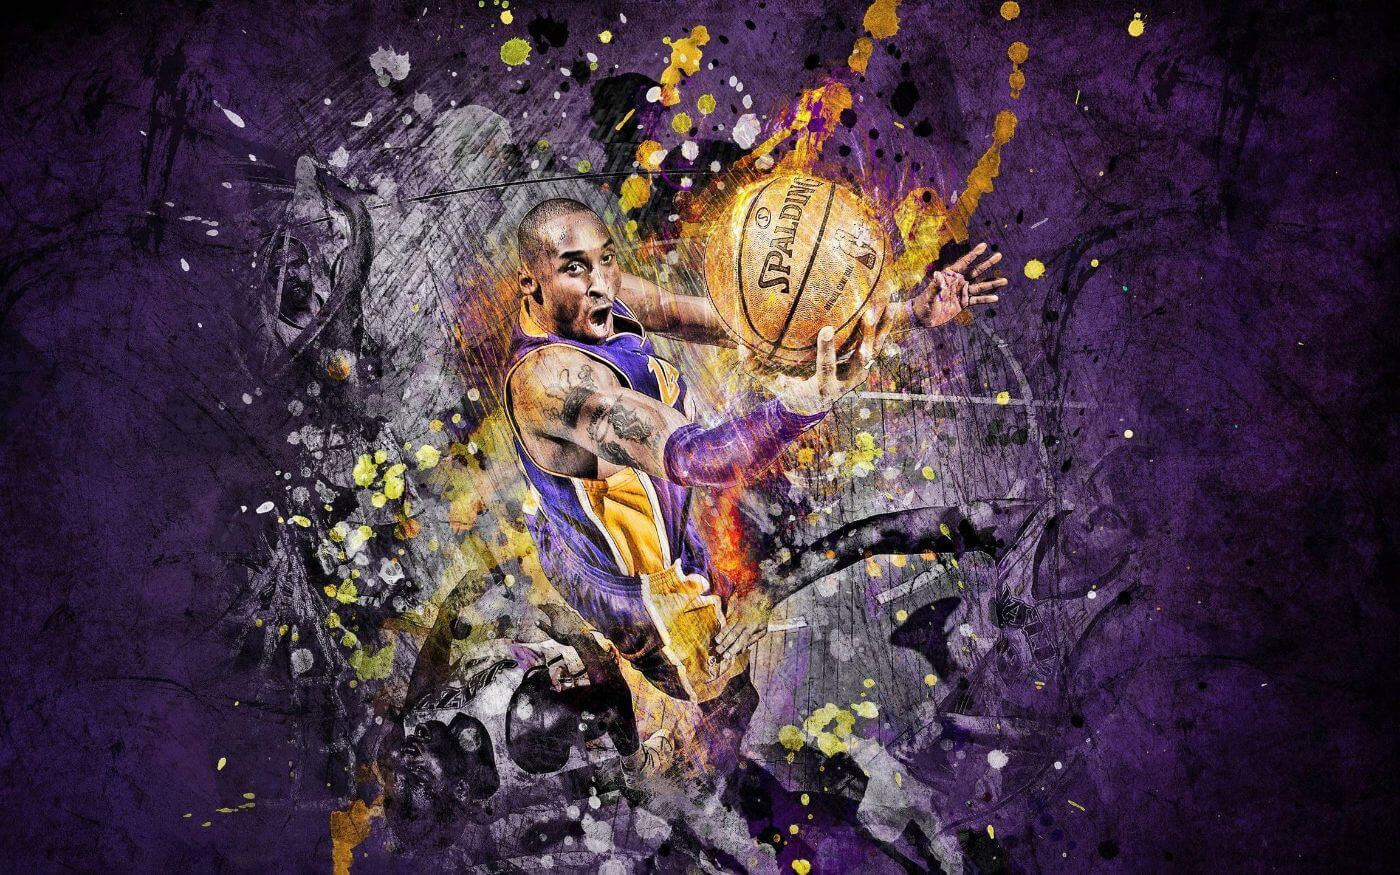 Spalding Kobe Bryant Basketball Purple Composite